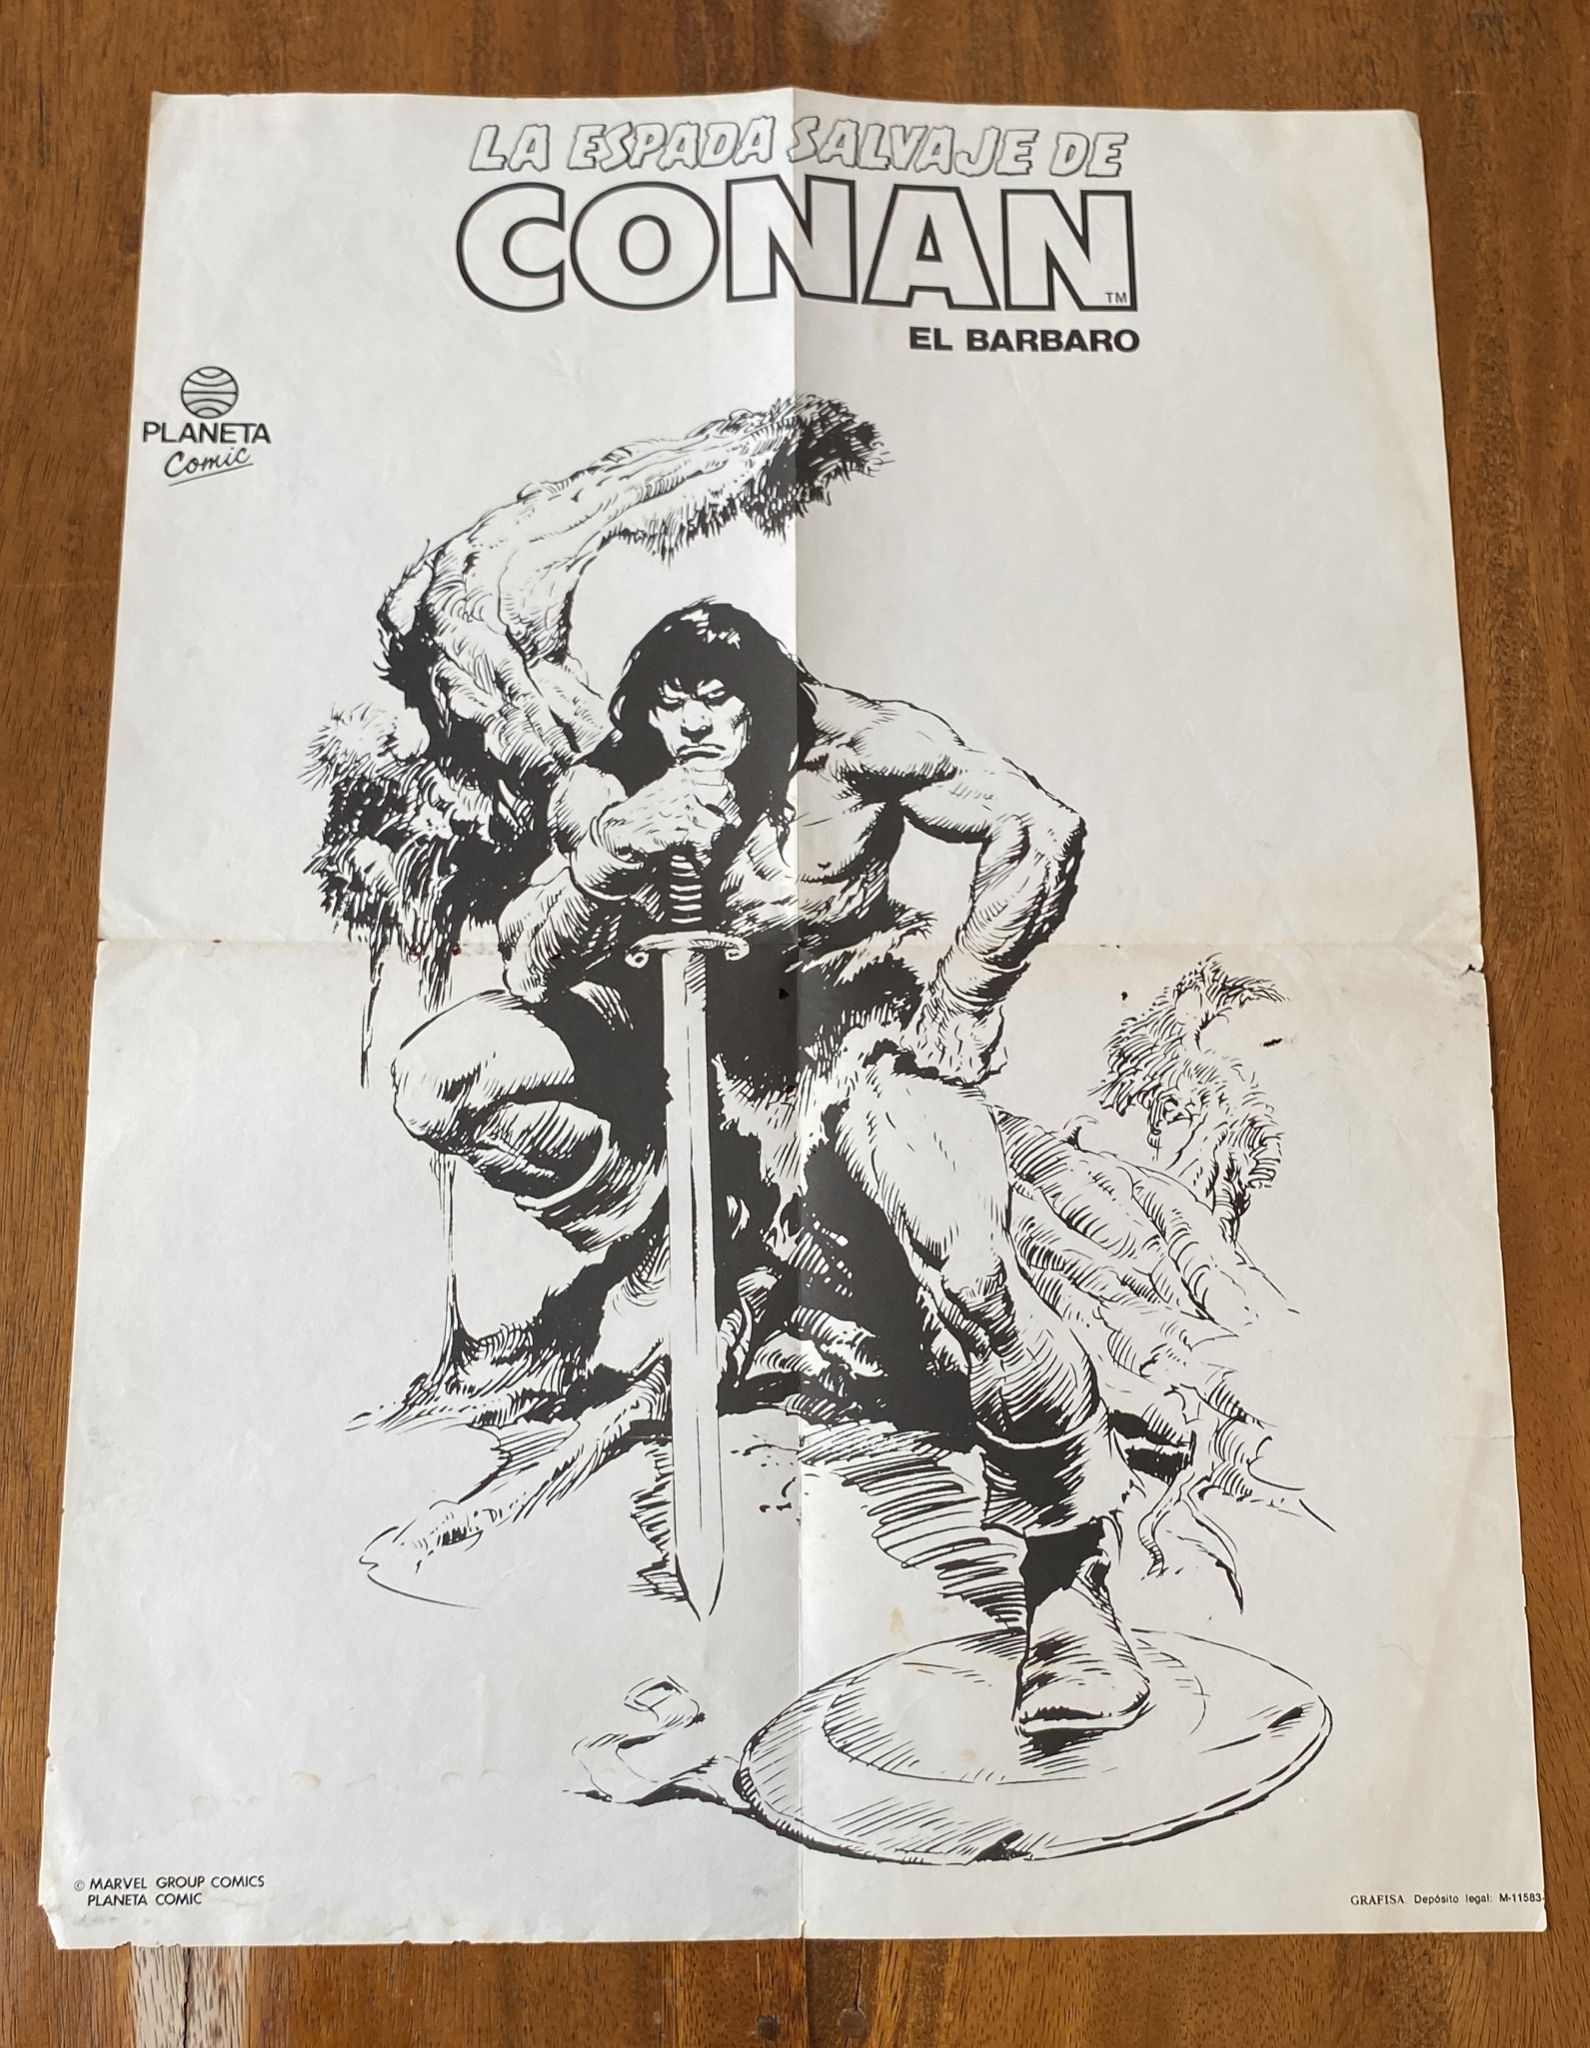 La Espada Salvaje de Conan. Cartel (53x39) de Planeta